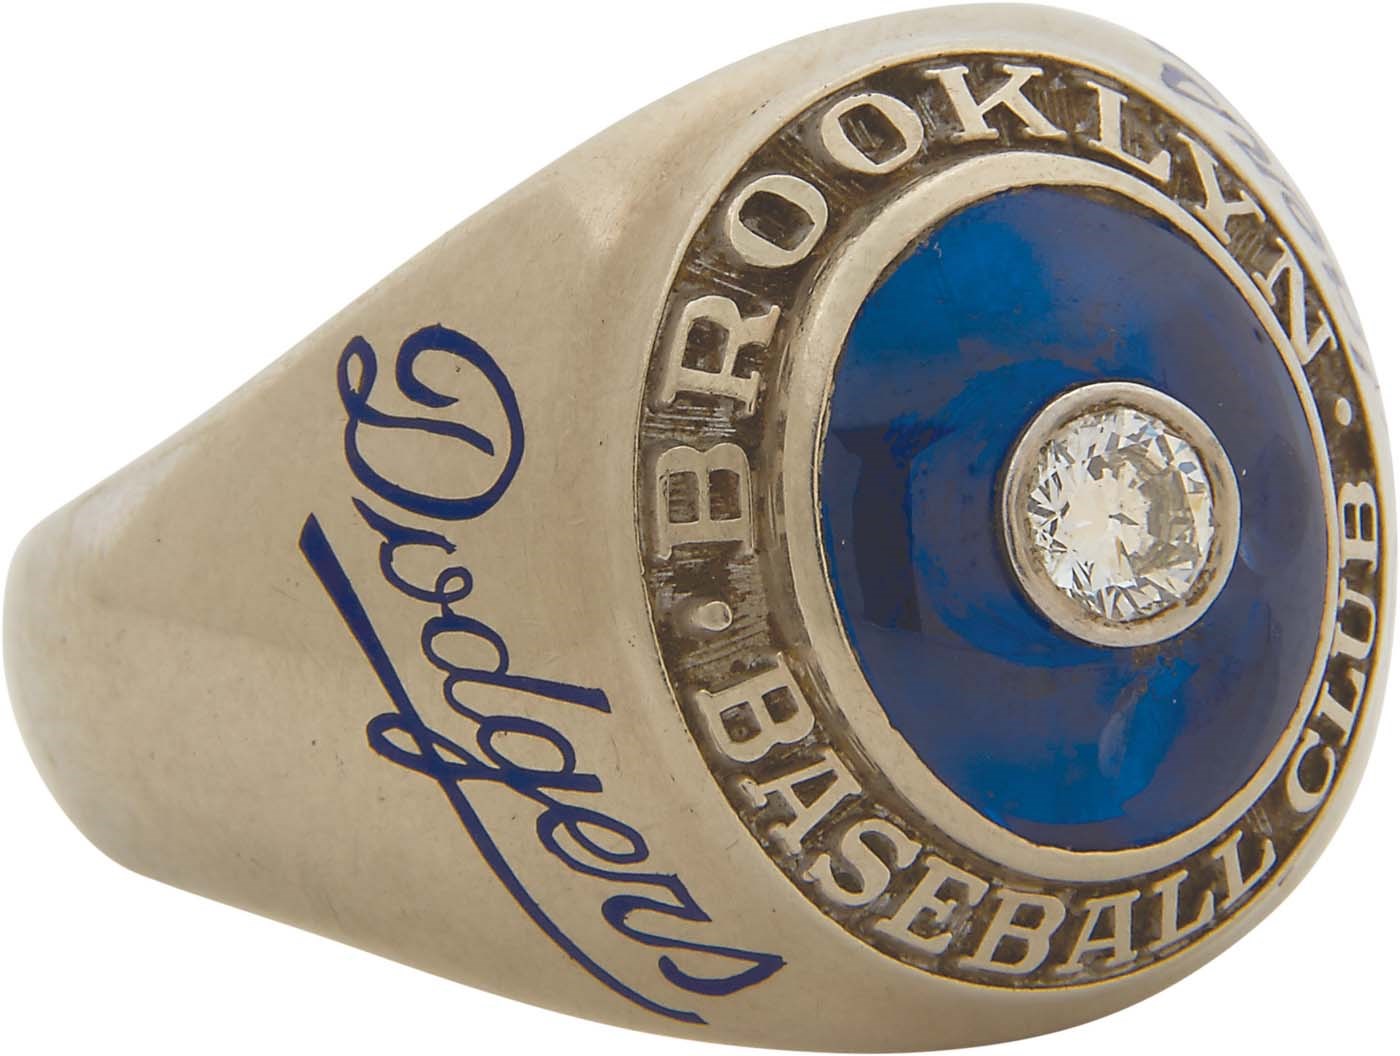 Circa 1947 Hap Minor Brooklyn Dodgers Team Ring